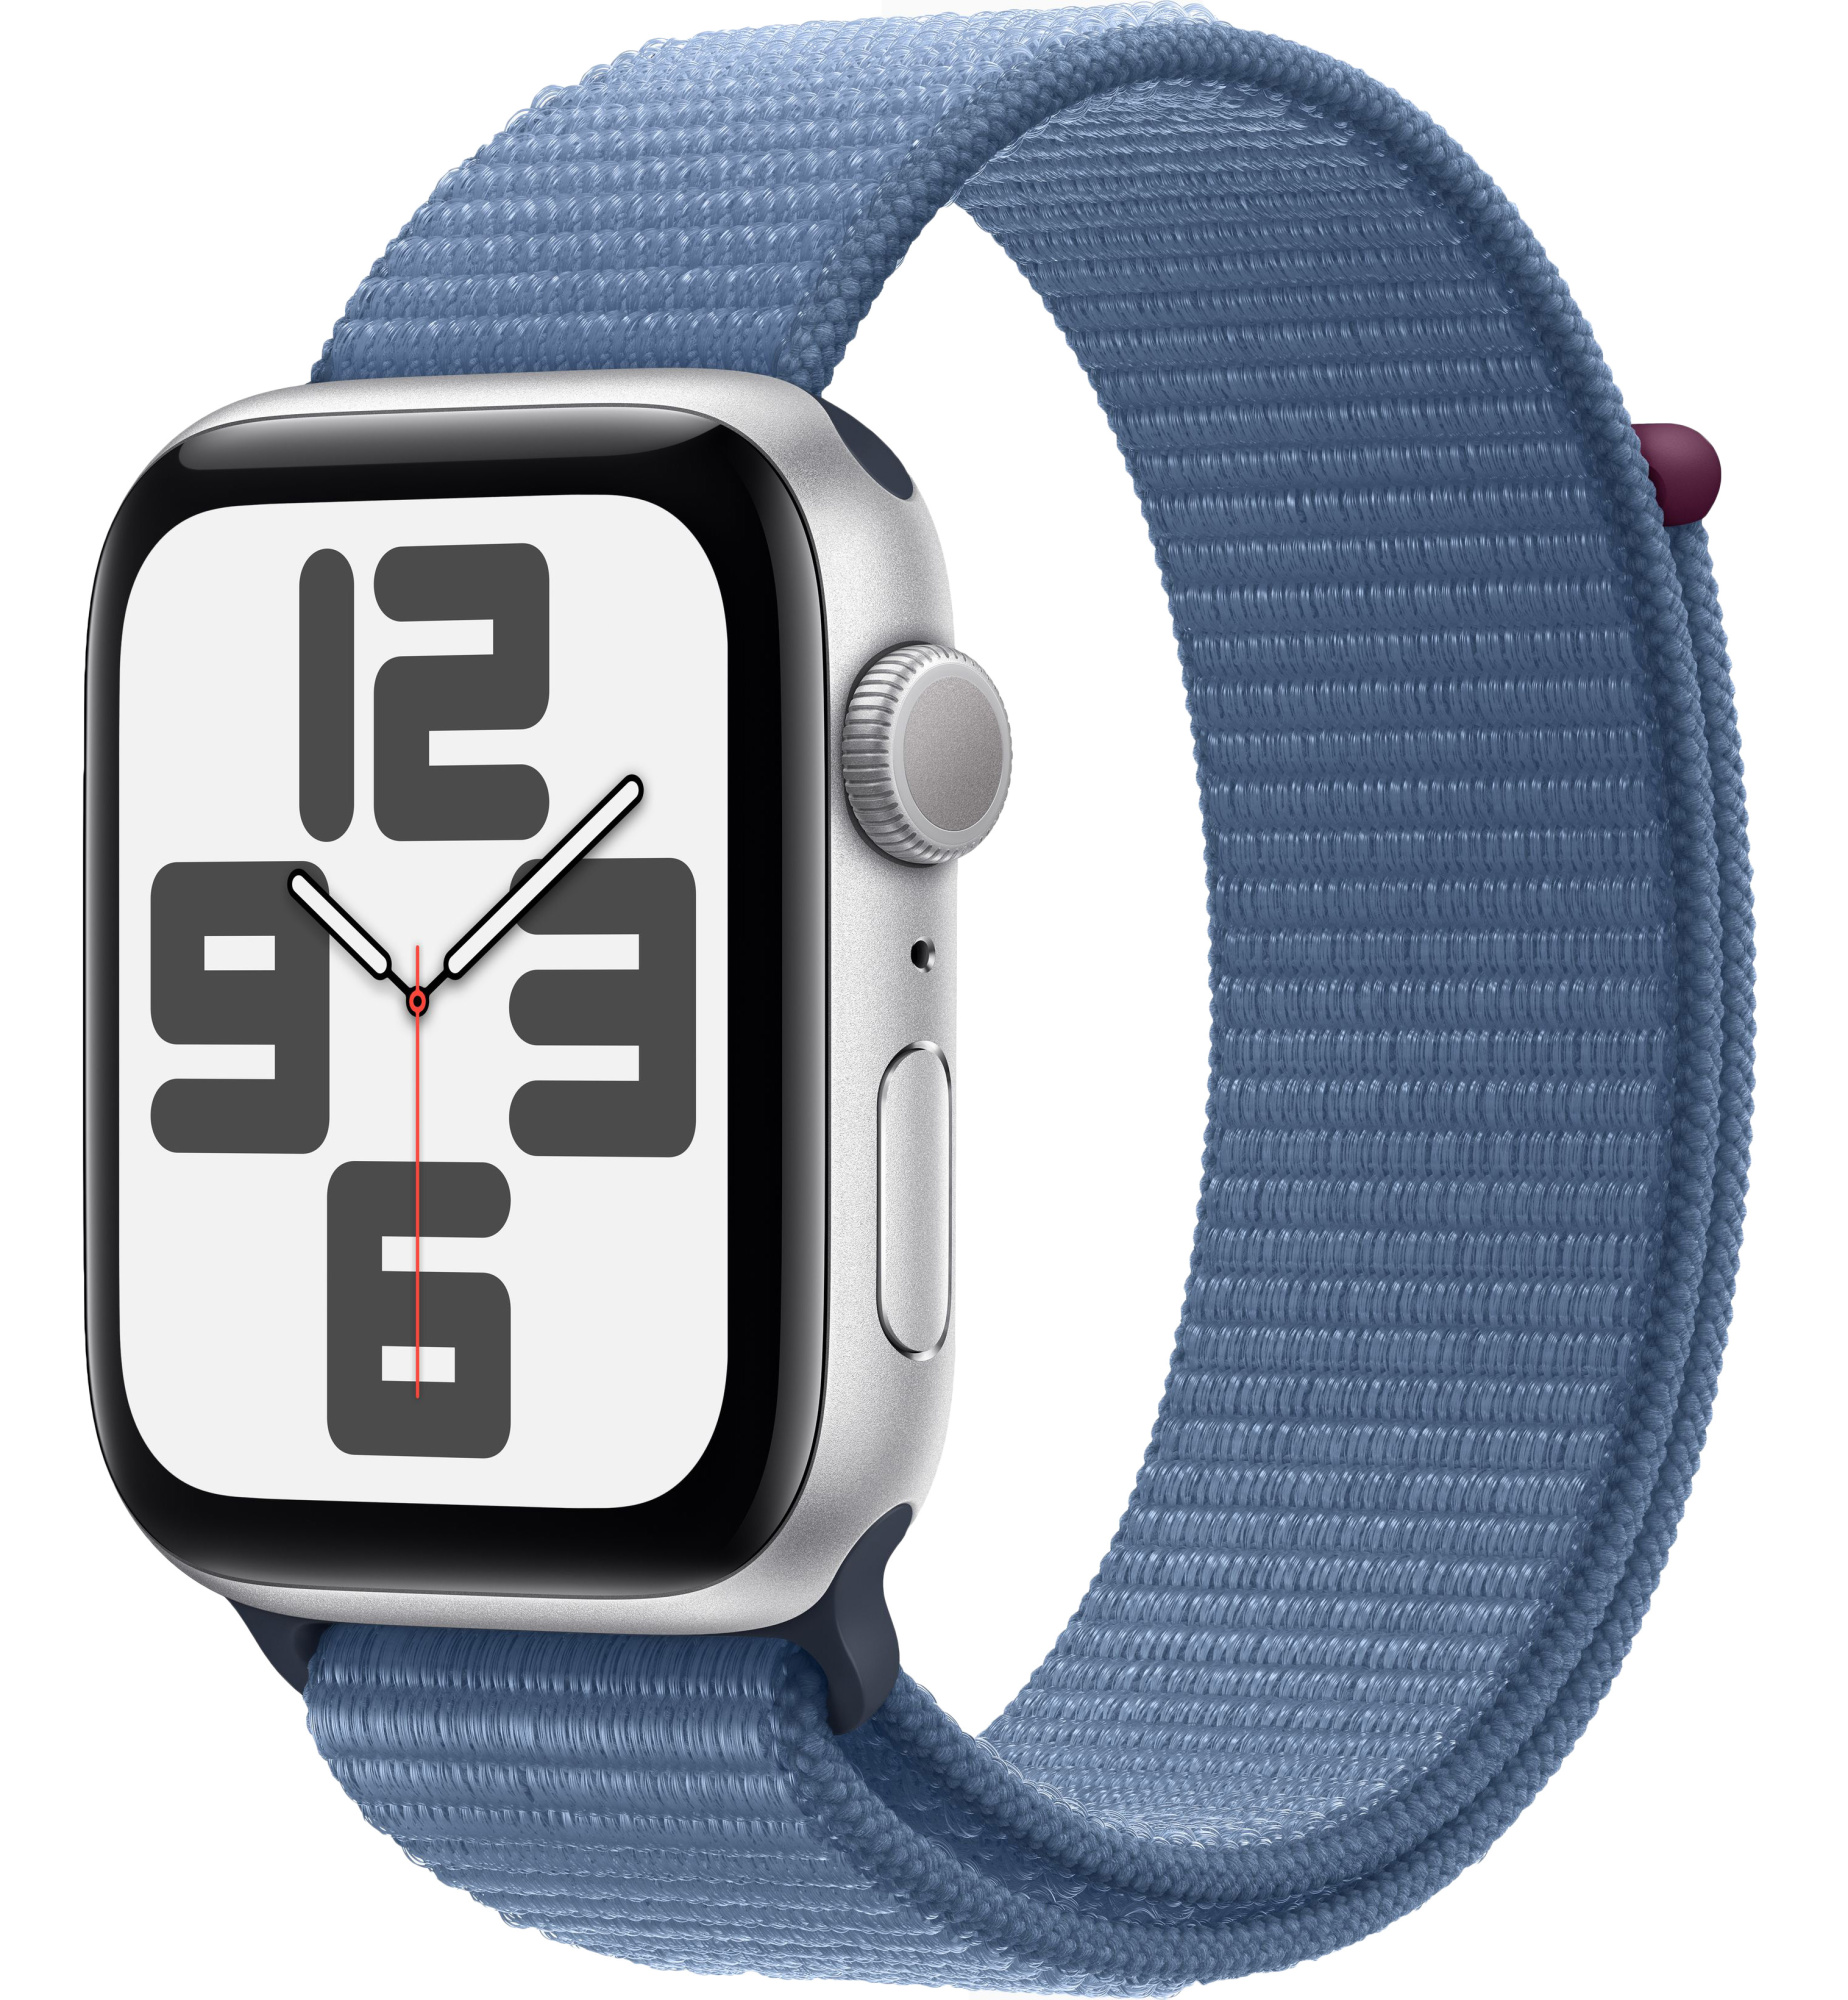 Watch se 2023 отзывы. Watch se 2023 40. Apple watch se 2023 44mm Starlight Sport loop. Apple watch se Gen 2 44mm Starlight. Se 2023 часы.